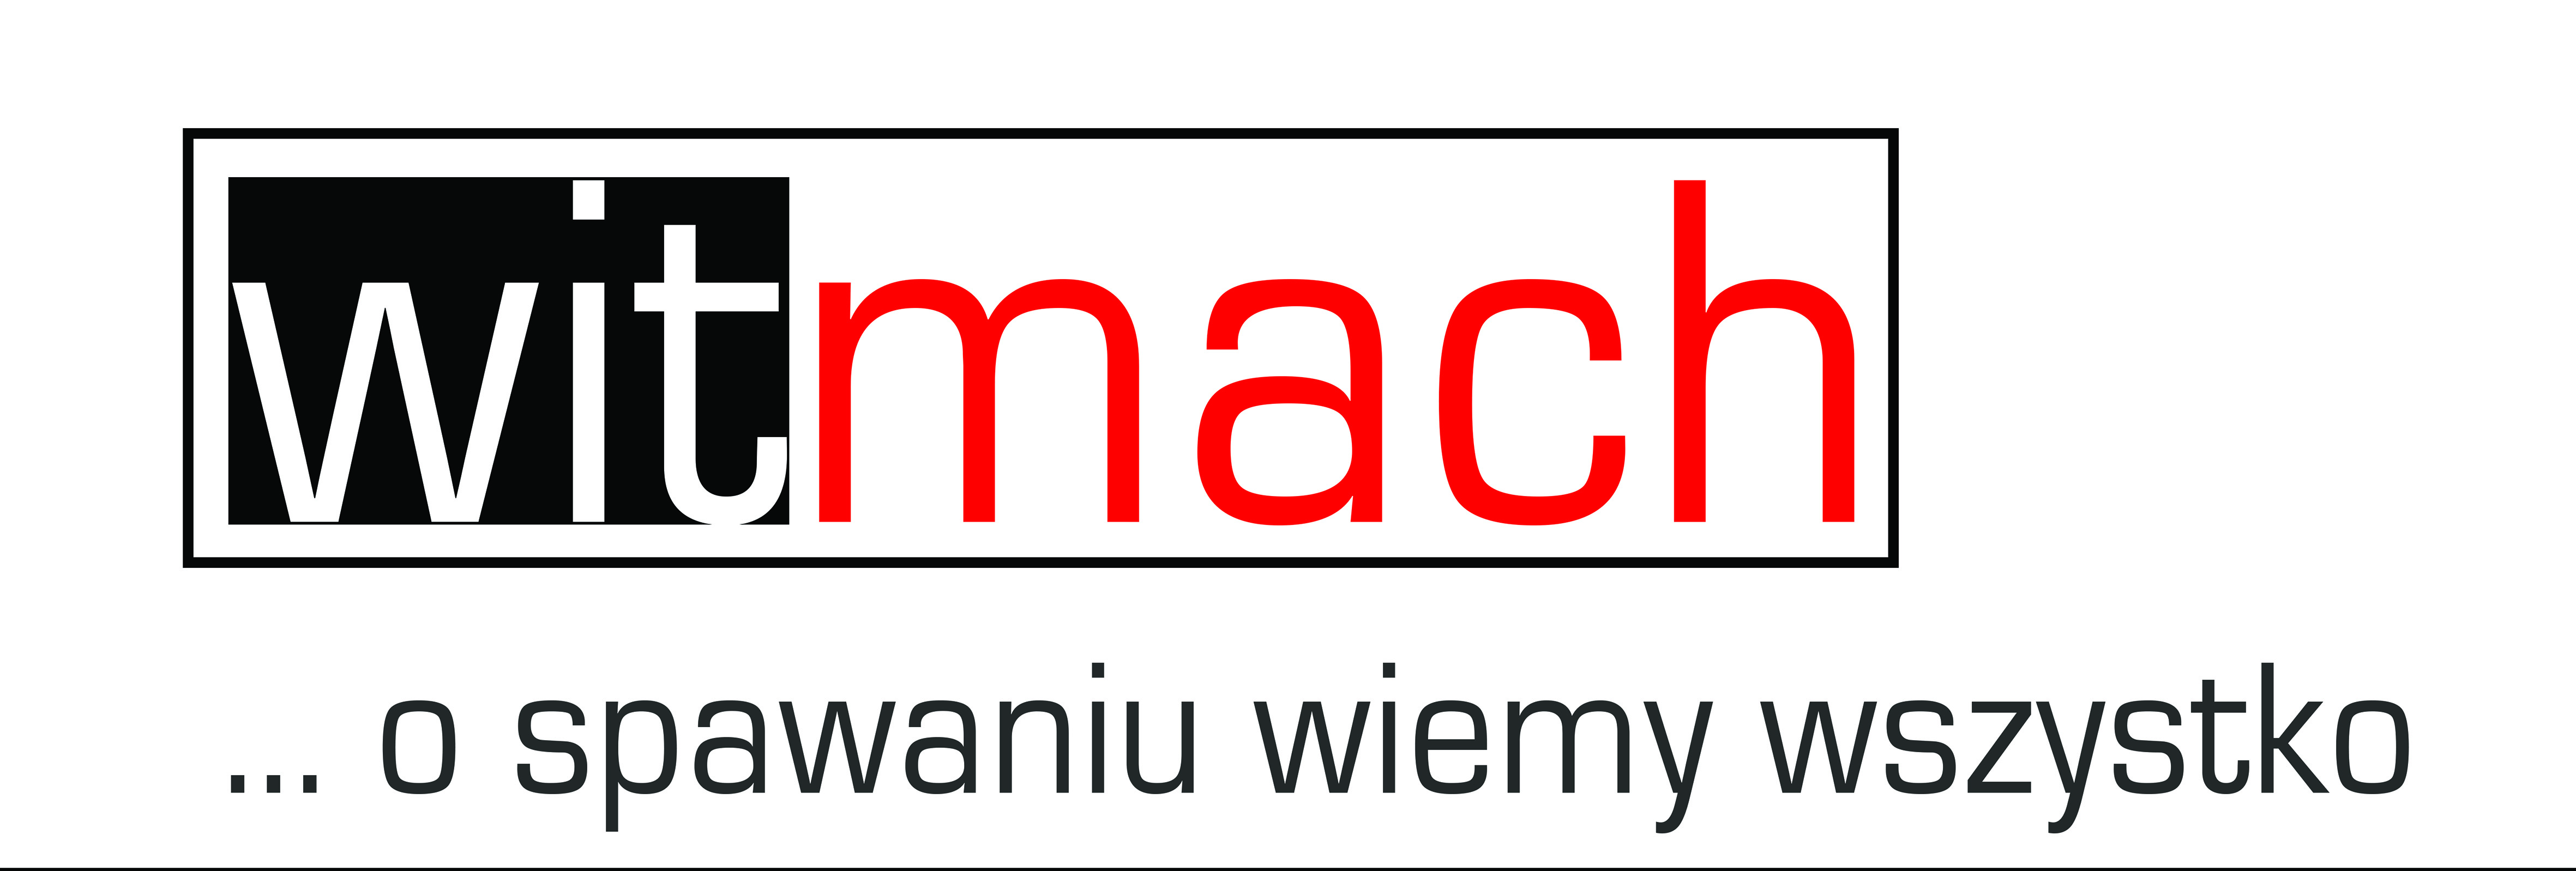 witmach logo